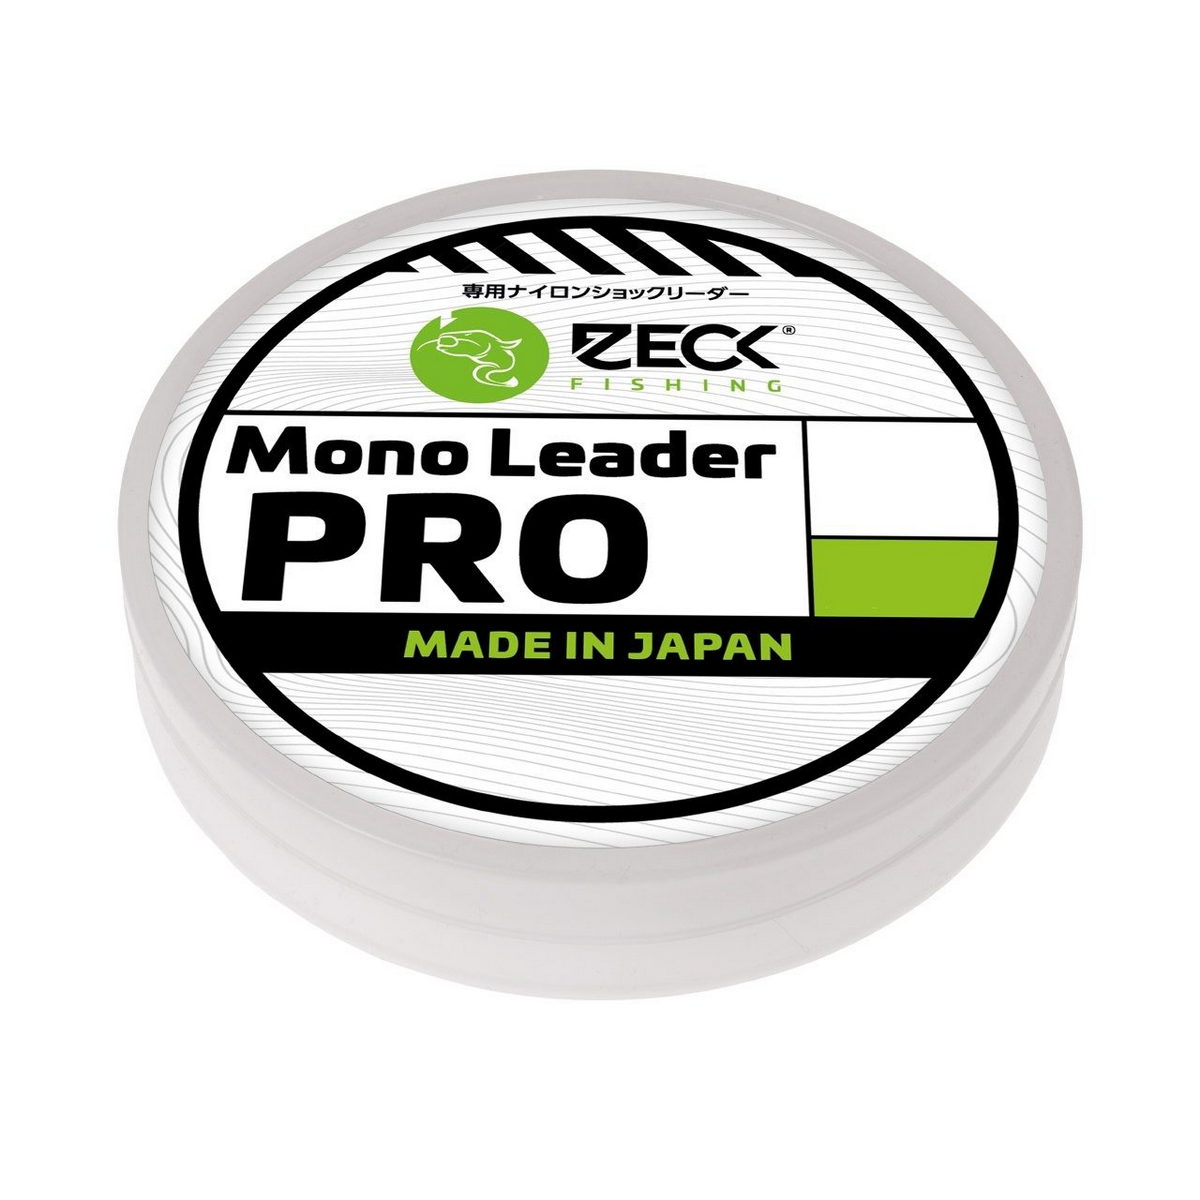 ZECK FISHING Mono Leader Pro 0,98mm |20m